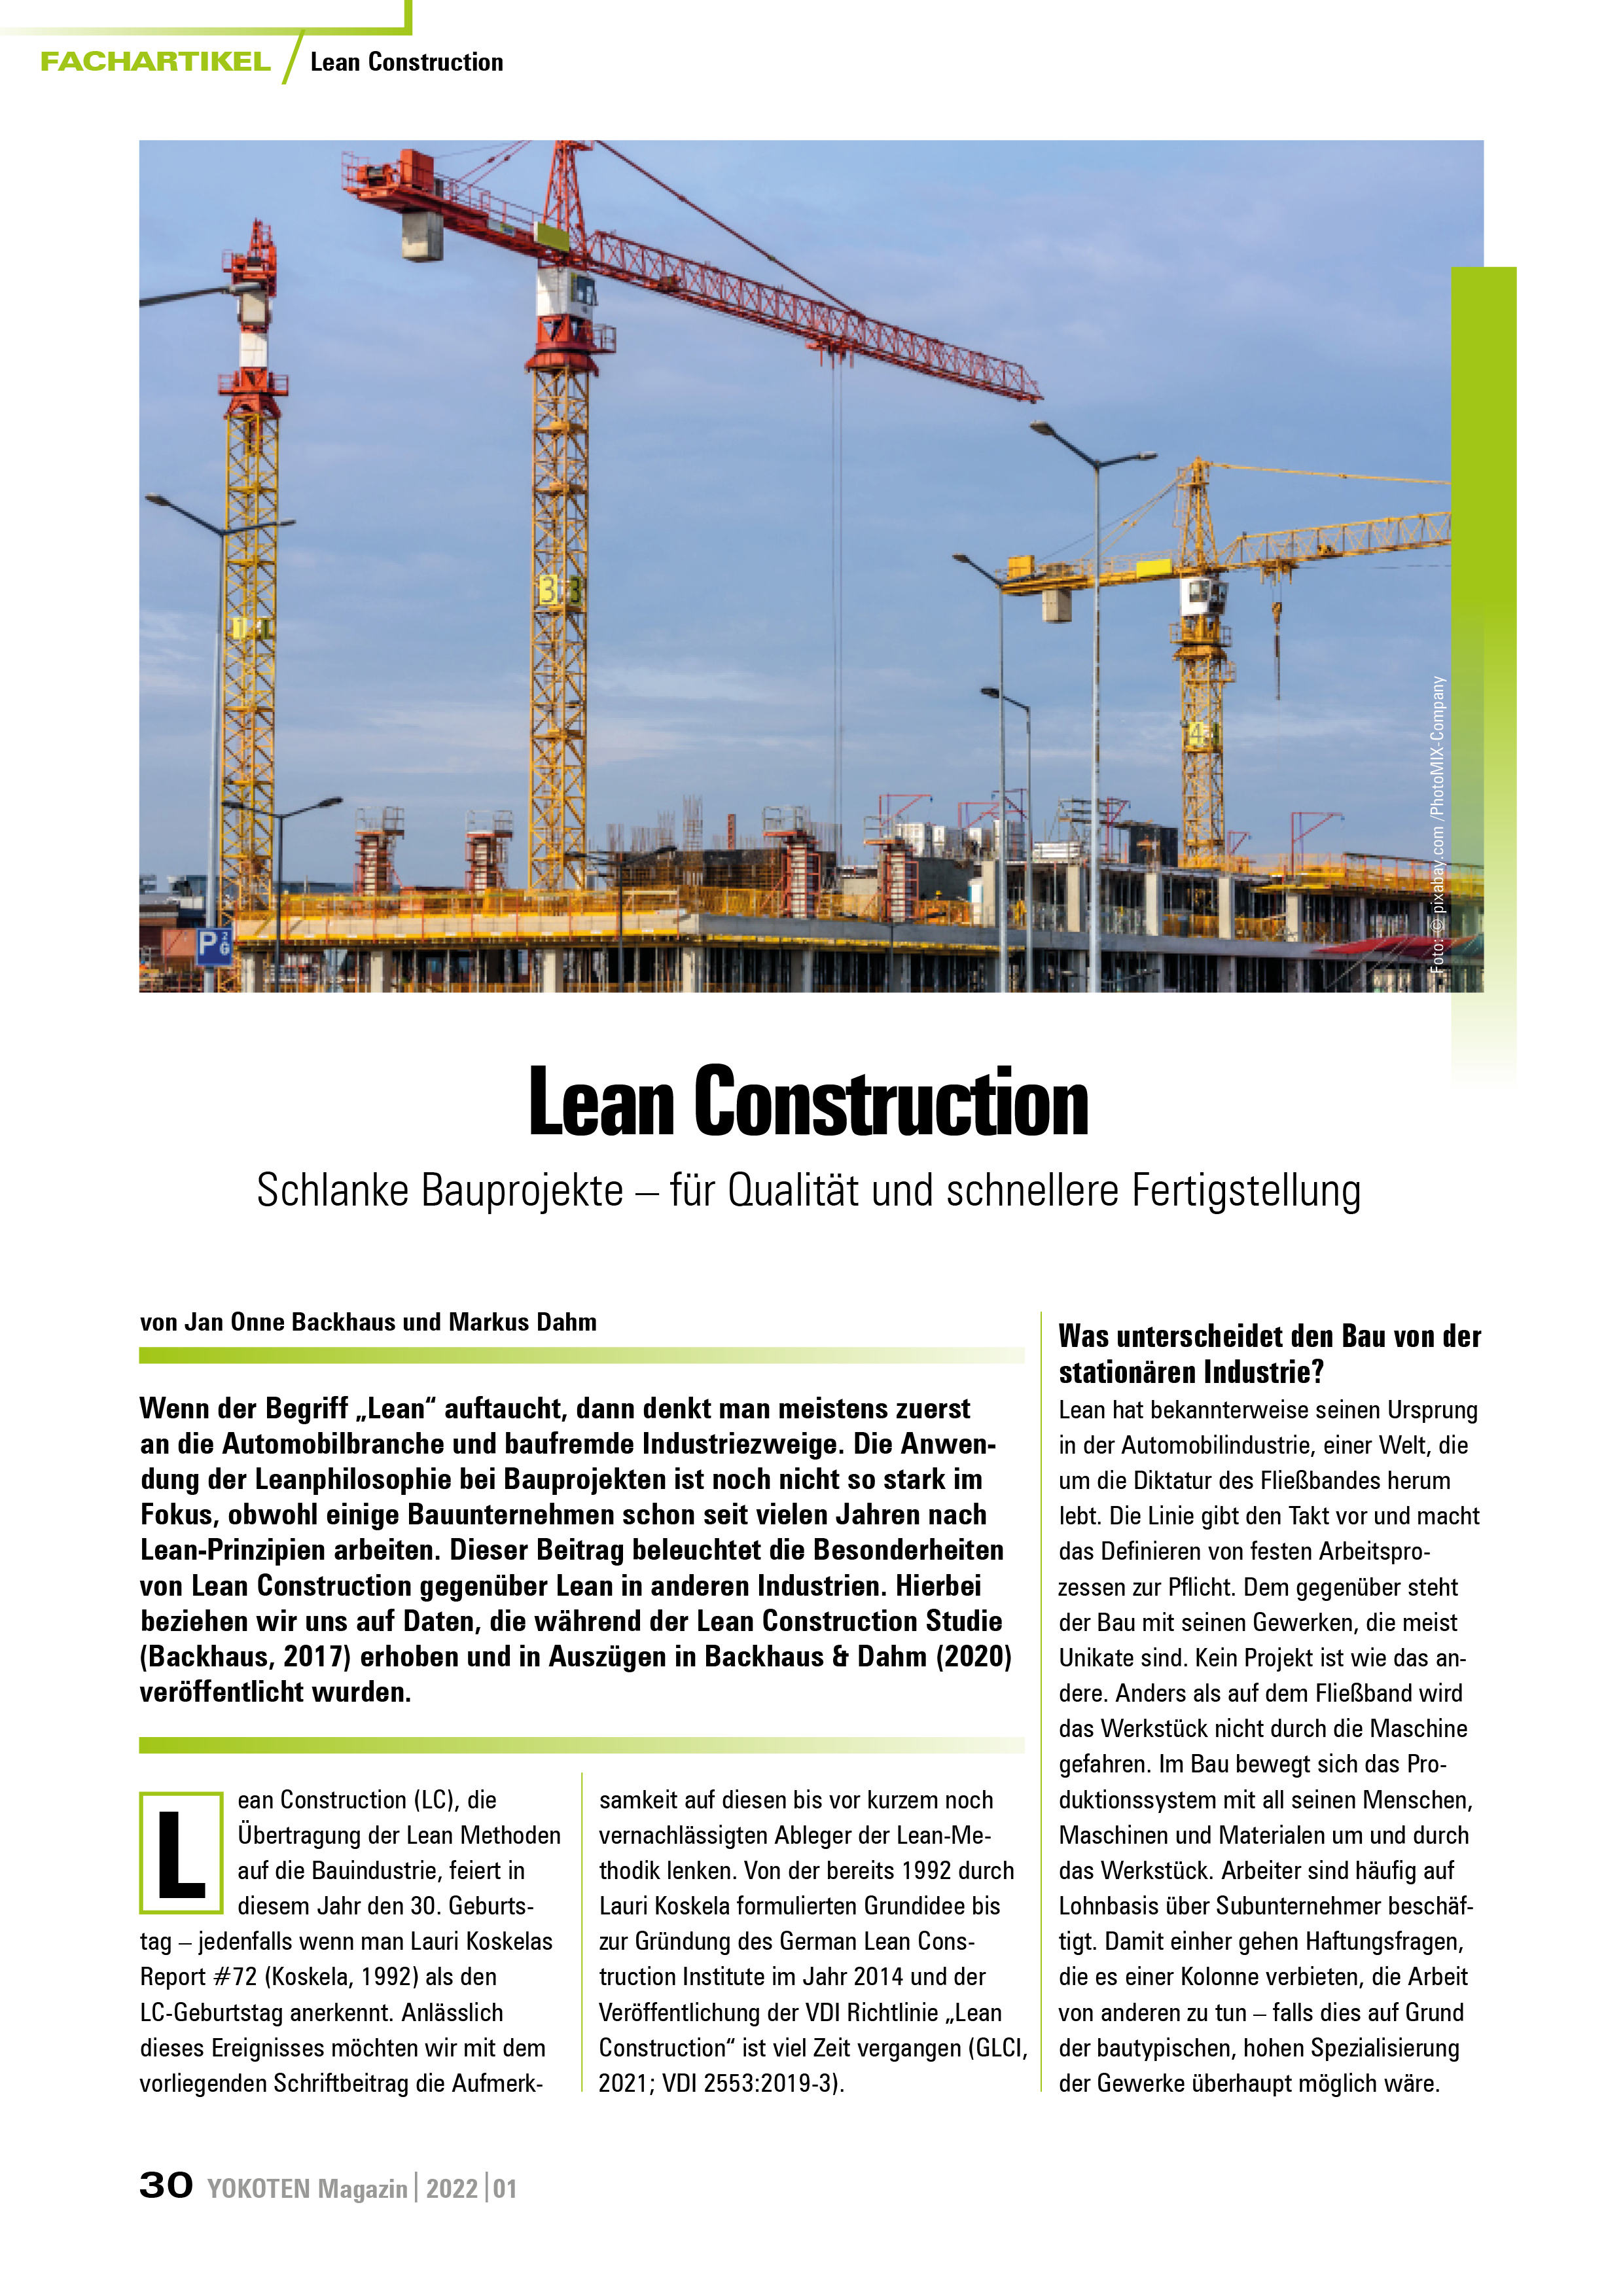 YOKOTEN-Artikel: Lean Construction